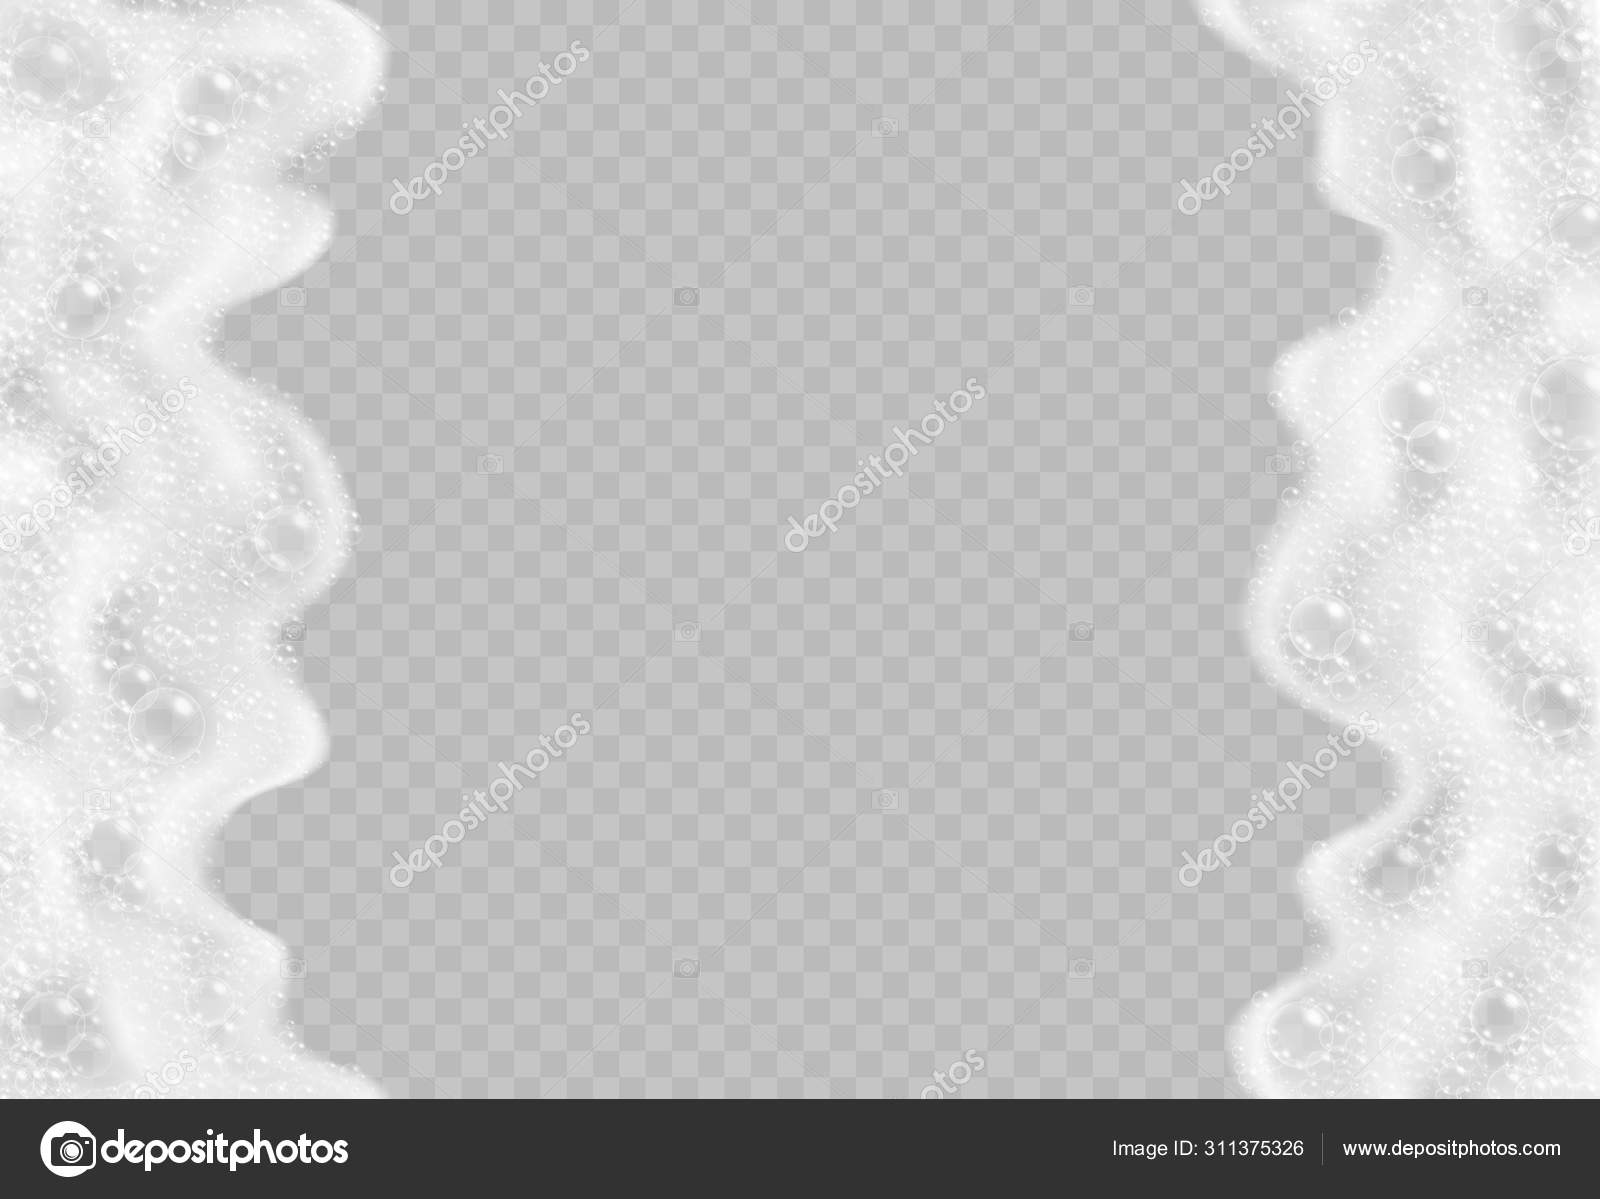 https://st4.depositphotos.com/10448384/31137/v/1600/depositphotos_311375326-stock-illustration-soap-foam-with-bubbles-top.jpg